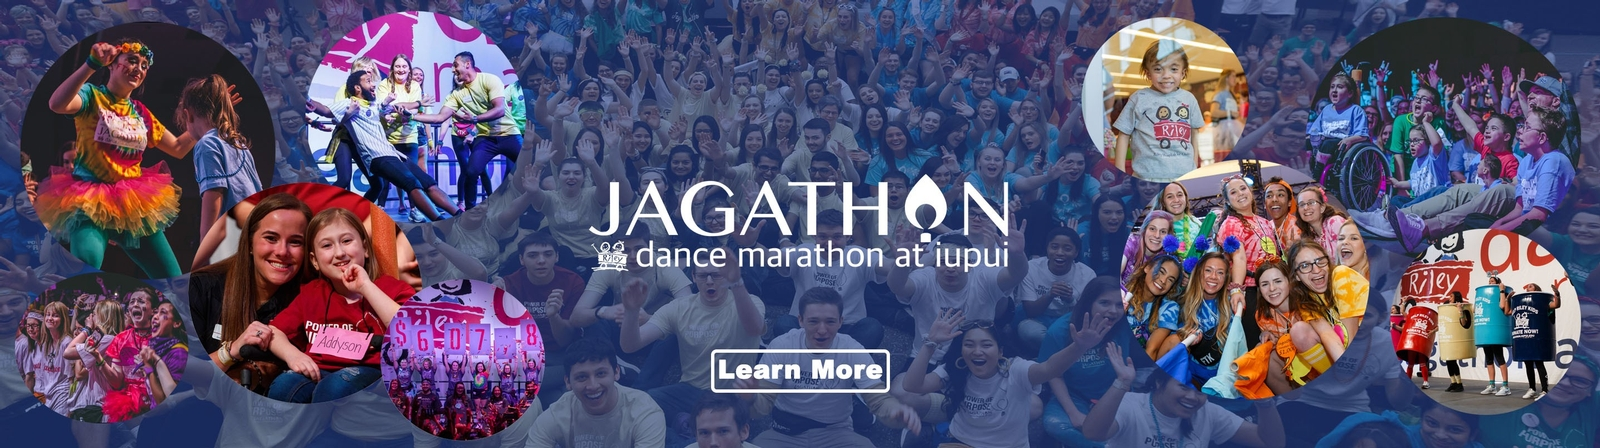 Jagathon Event Picture Banner